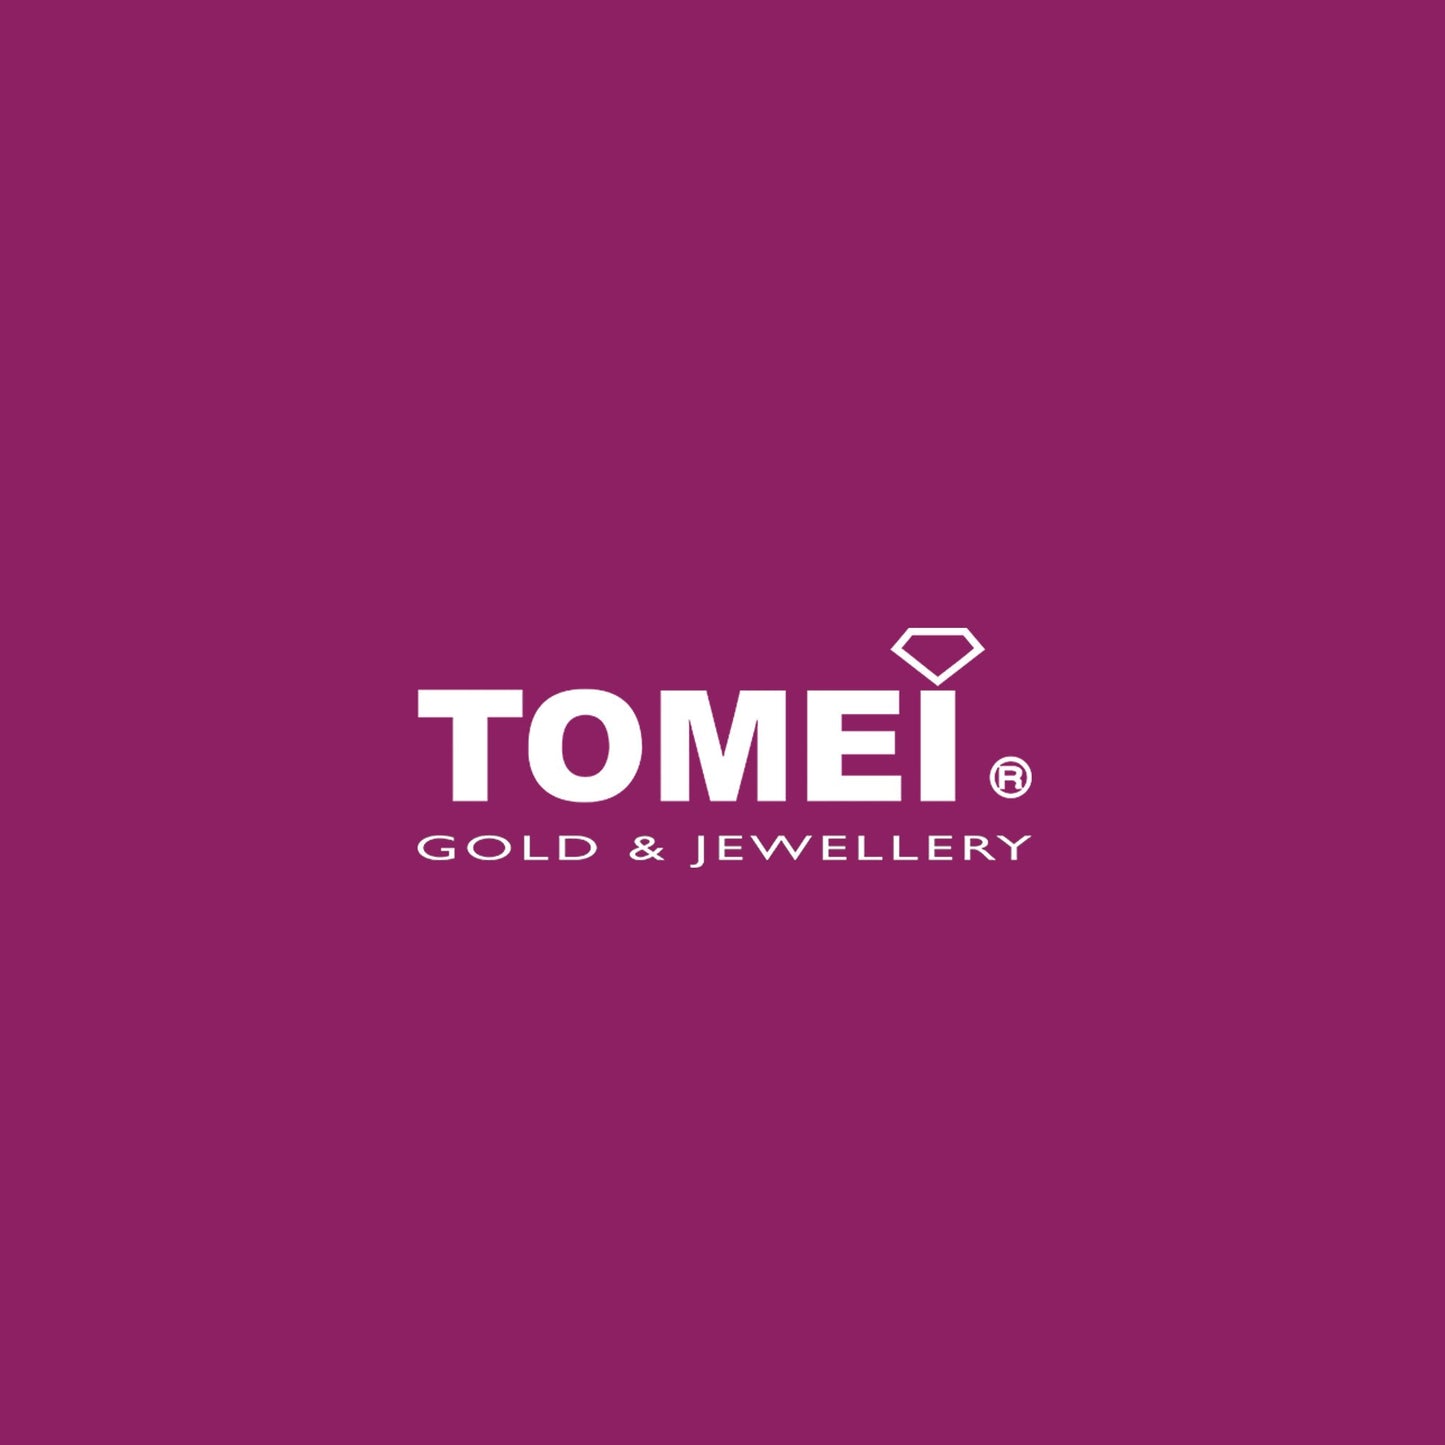 TOMEI Joyous Tinsels Collection Diamond Bracelet, White+Rose Gold 585